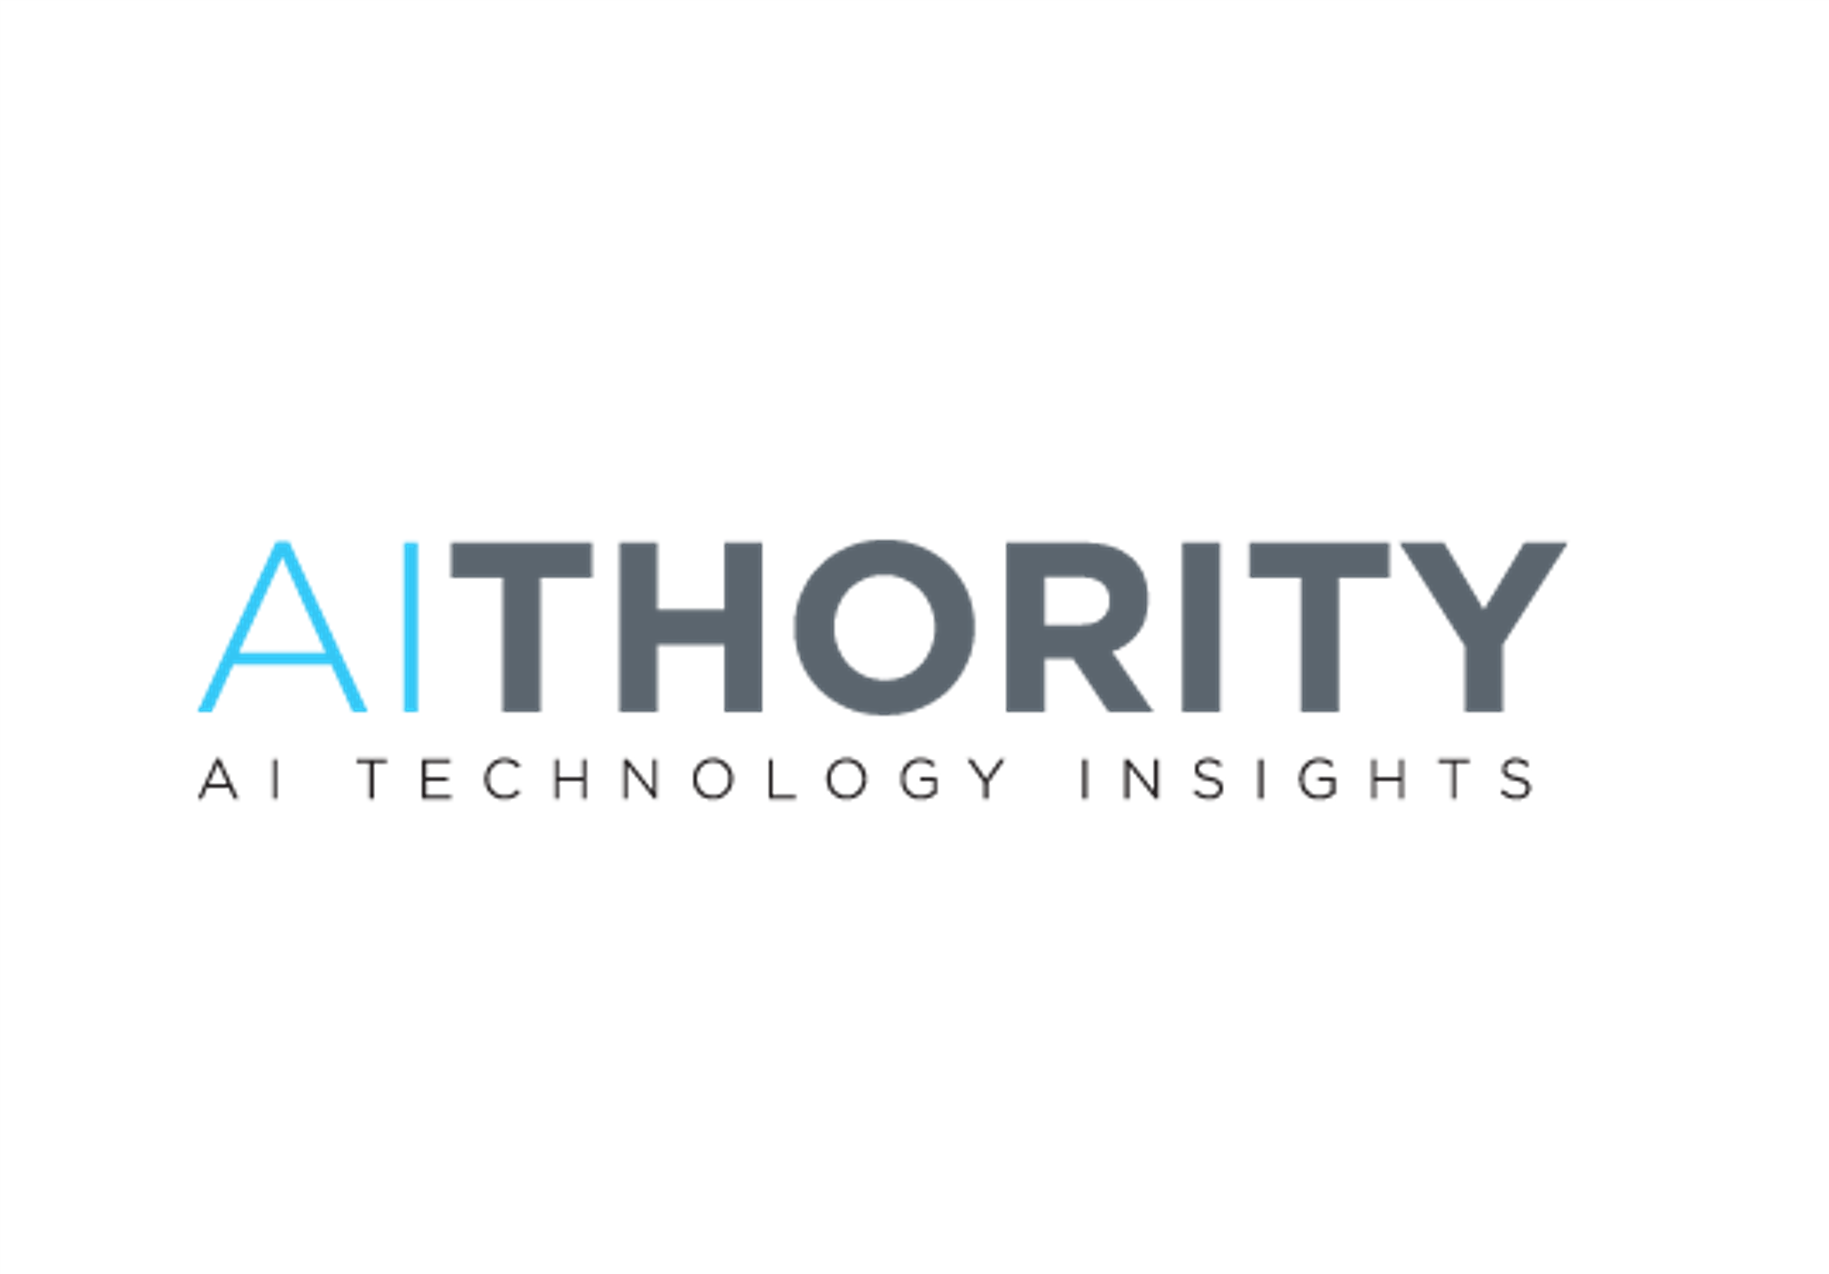 AITHority Logo